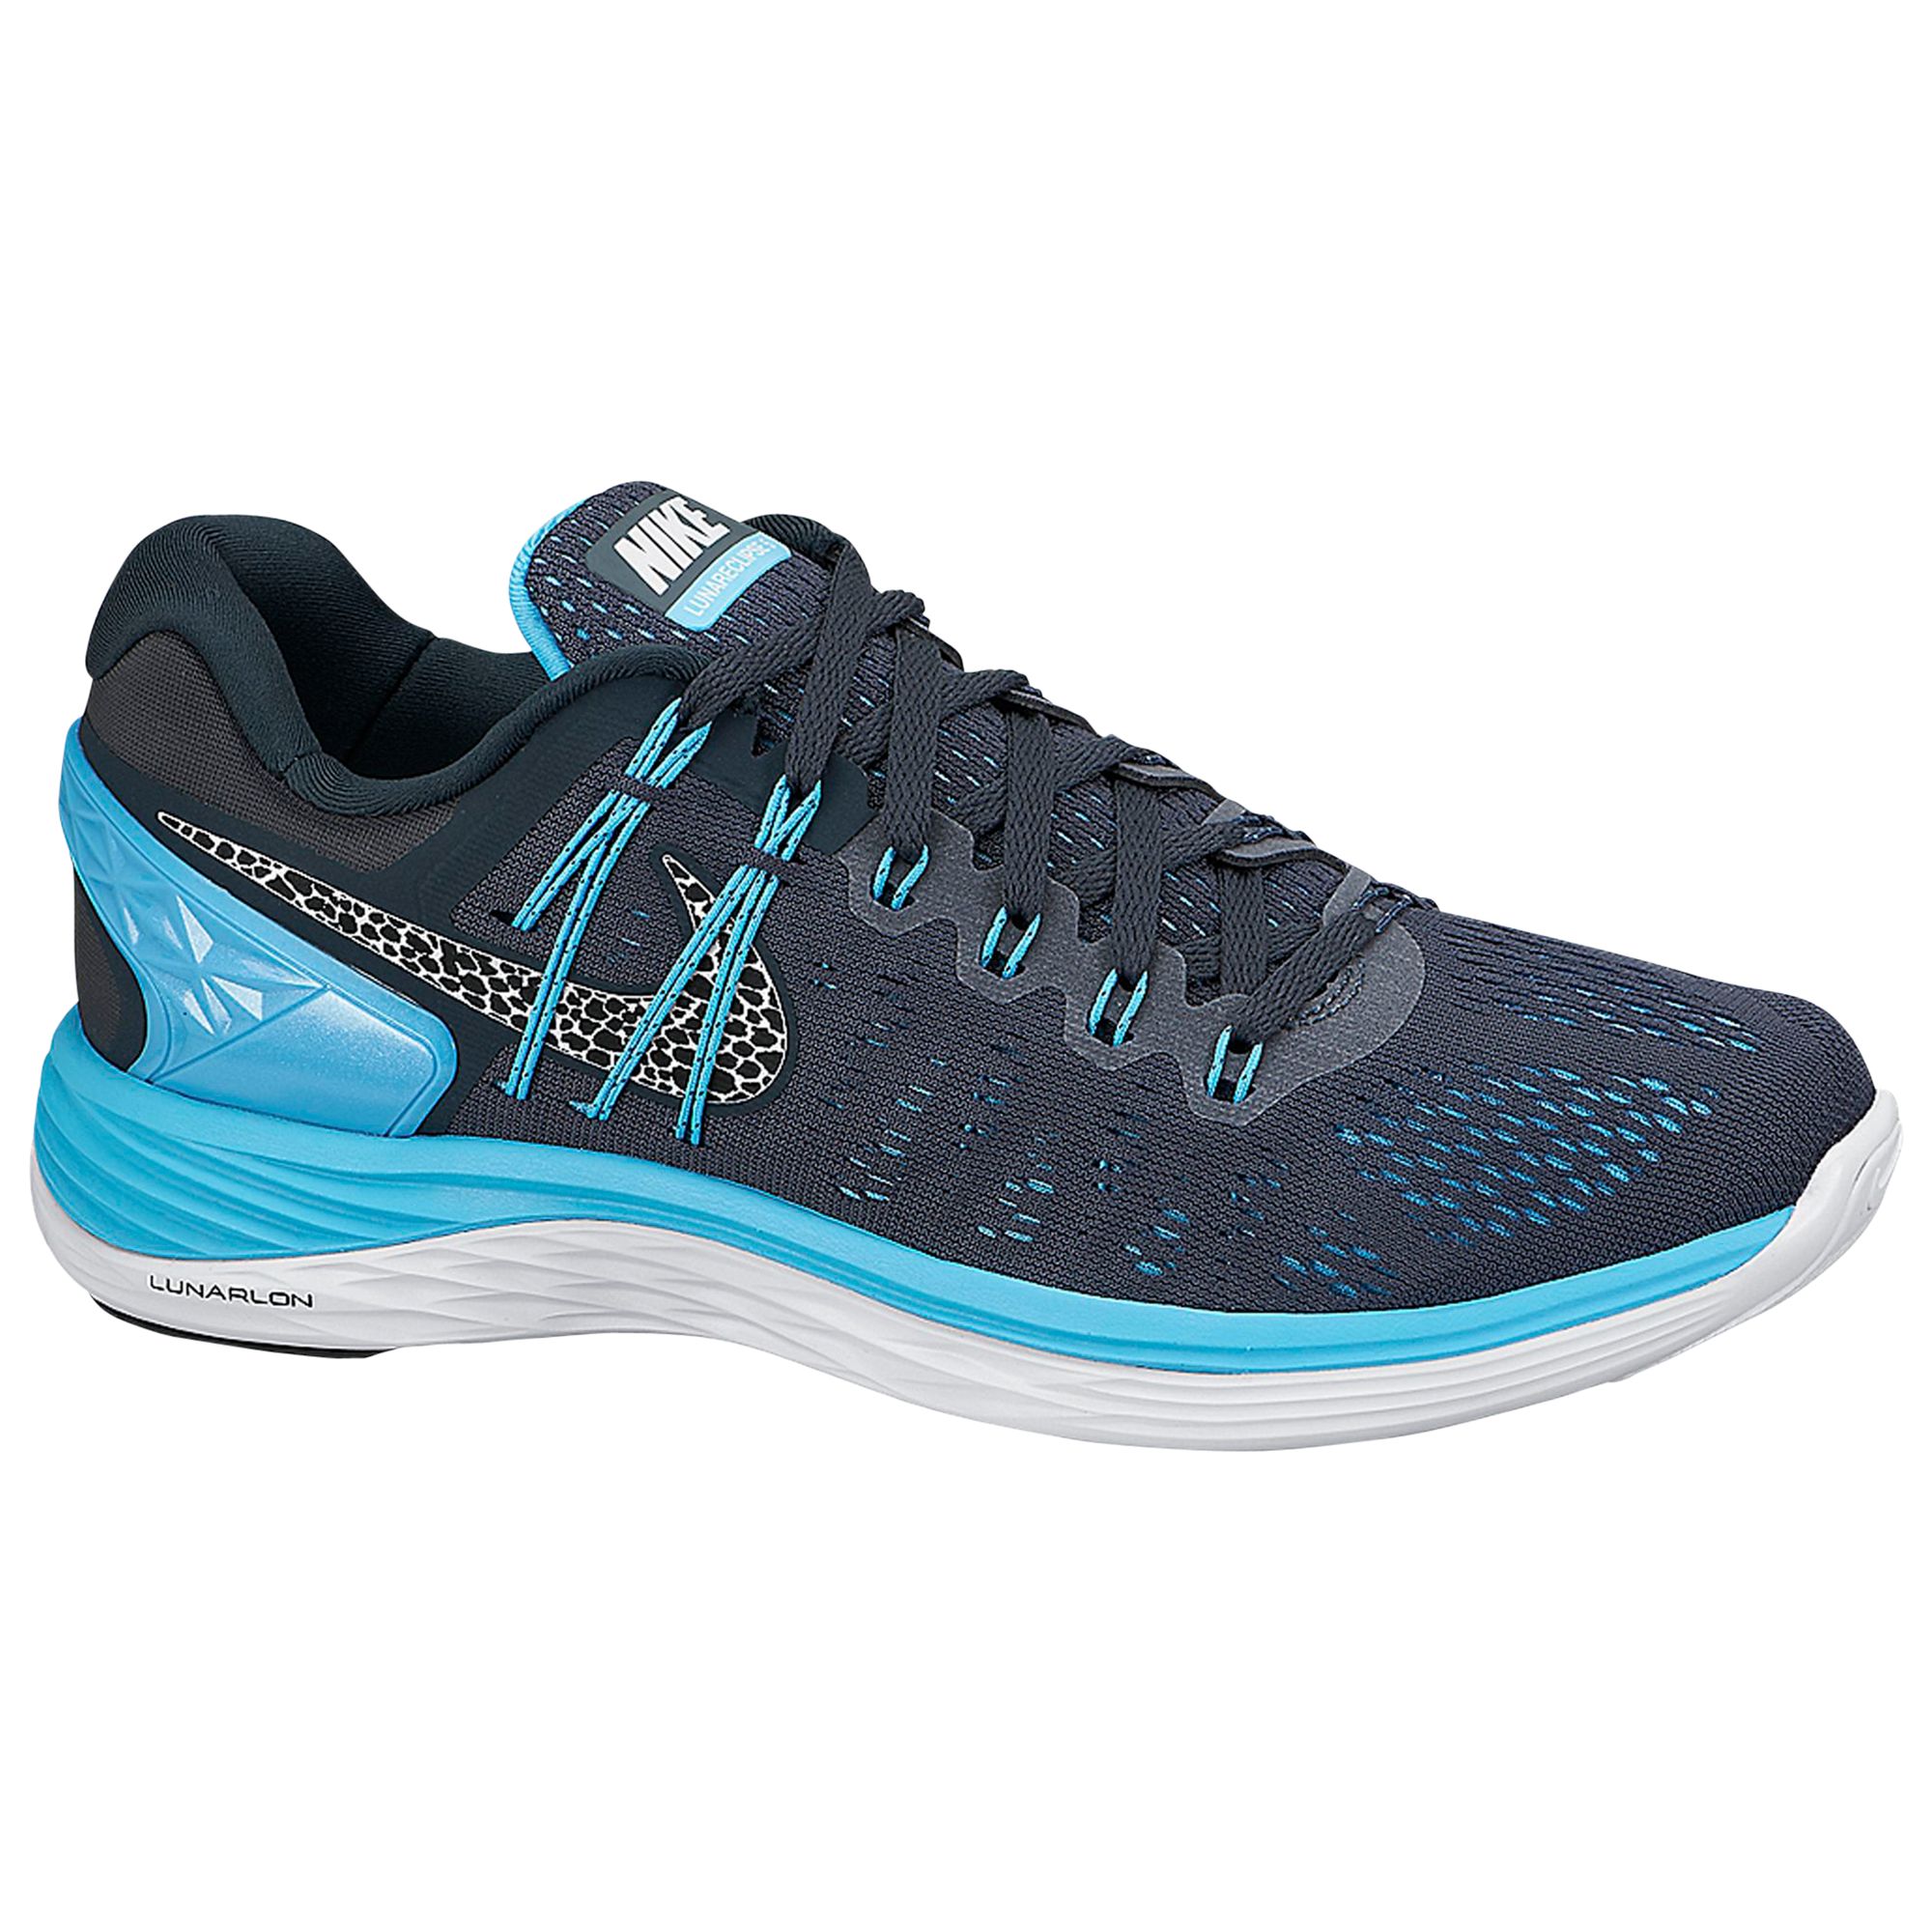 Nike LunarEclipse Women's Running Shoes, Grey/Blue